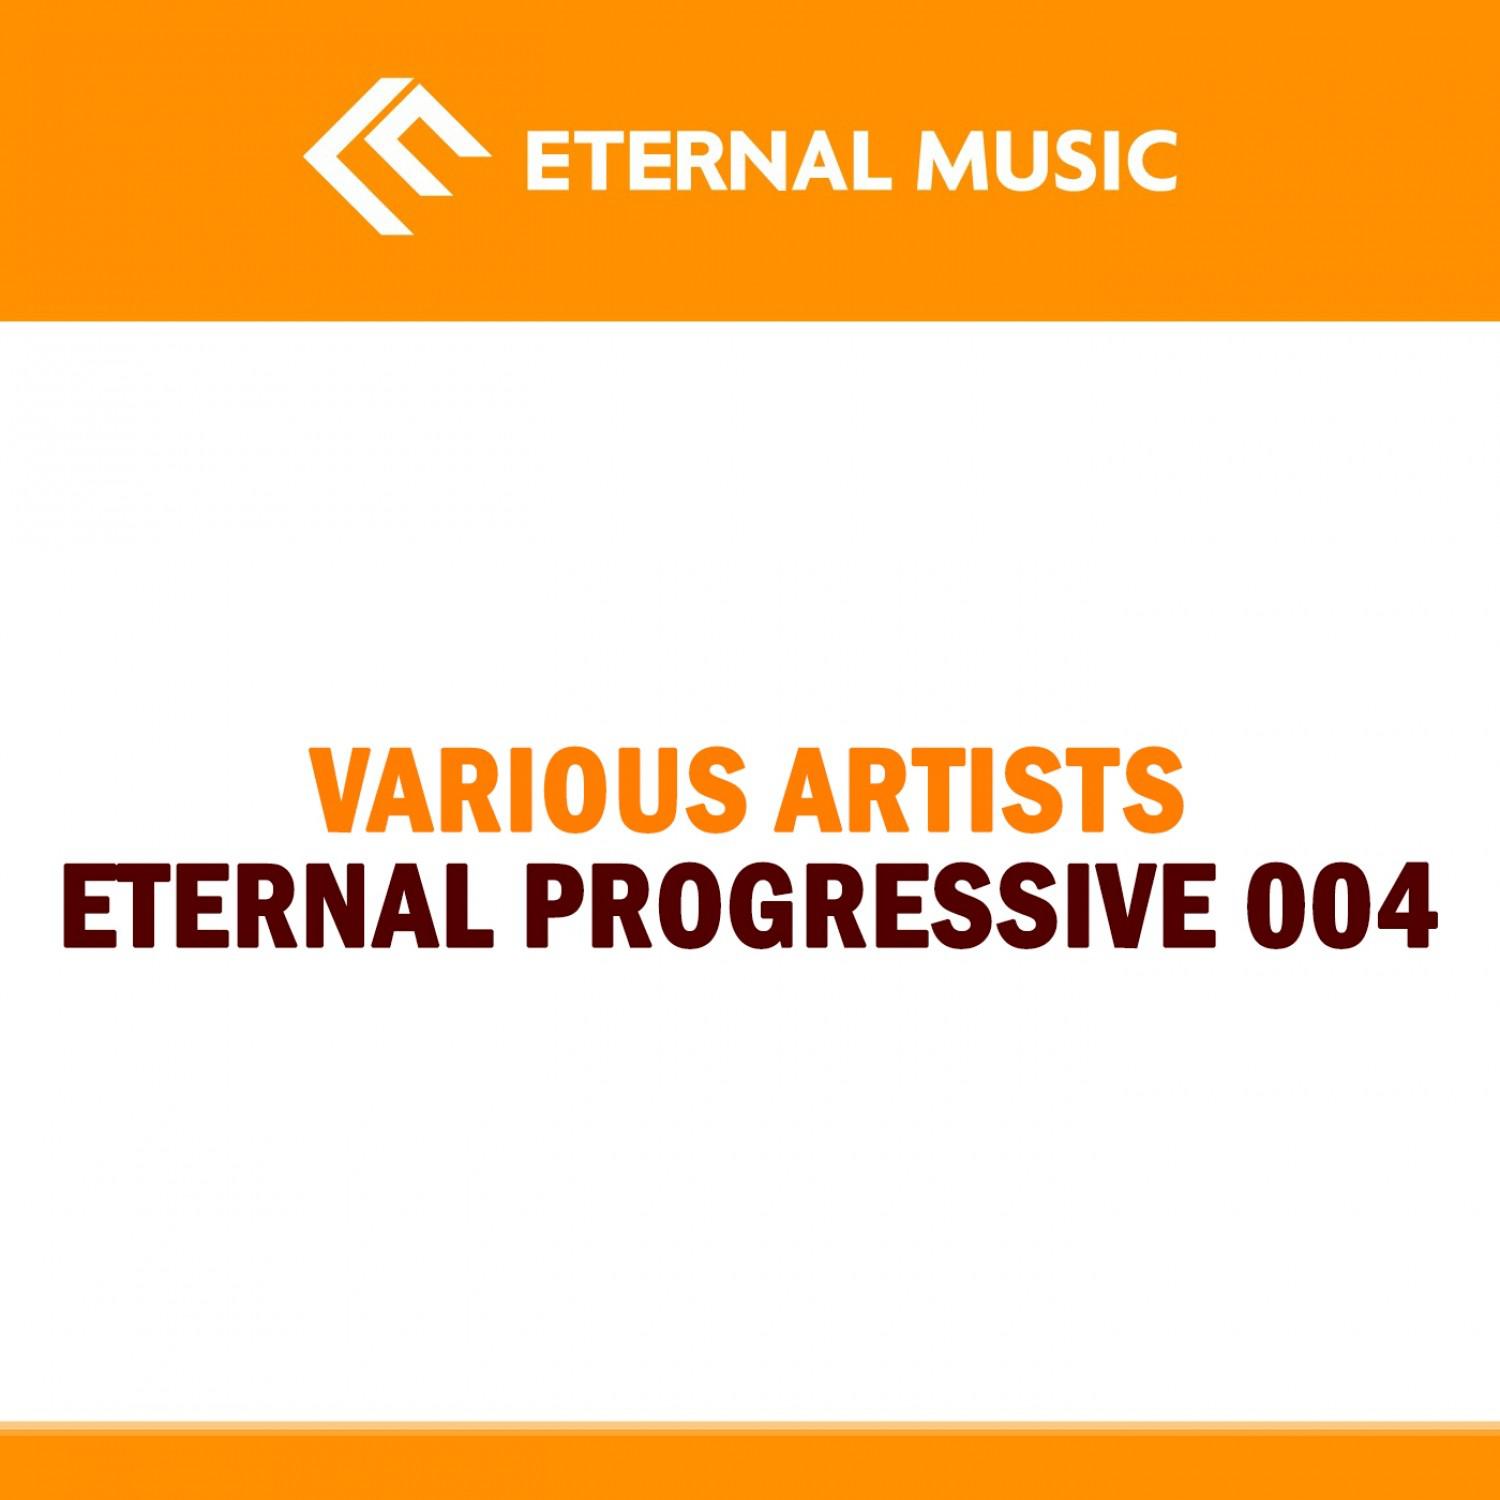 Eternal Progressive 004